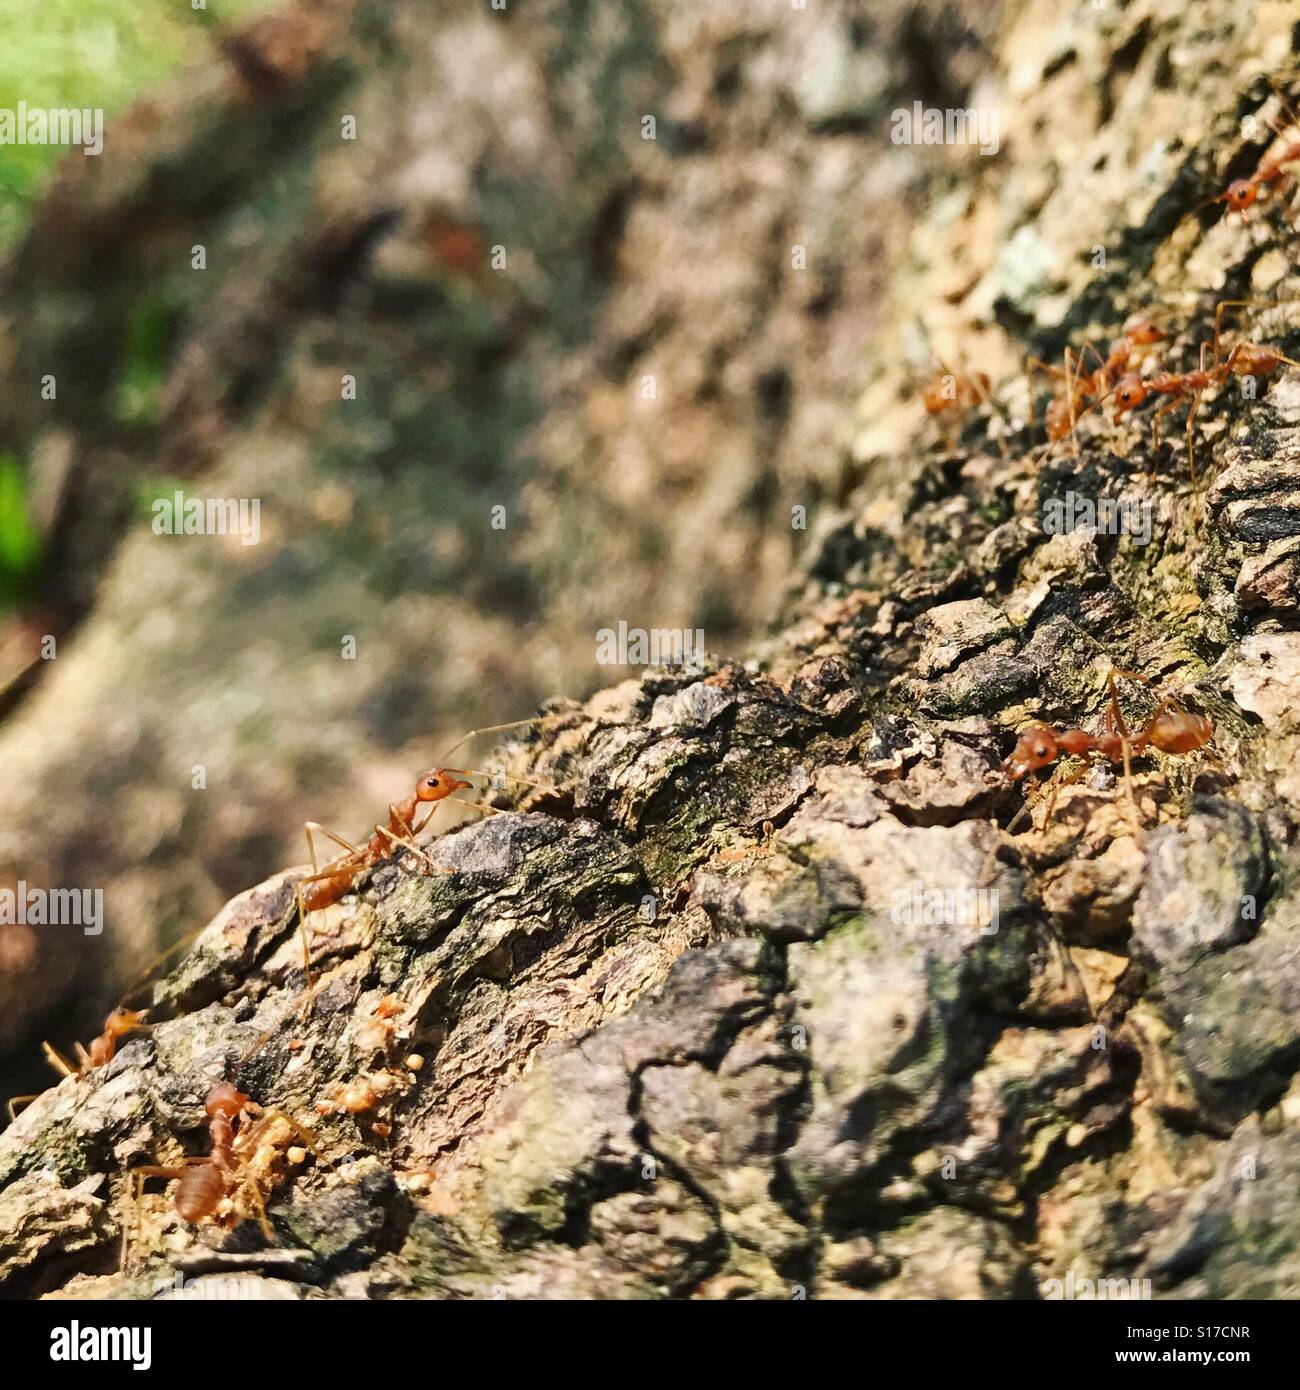 Colony of red ant roaming the tree bark Stock Photo